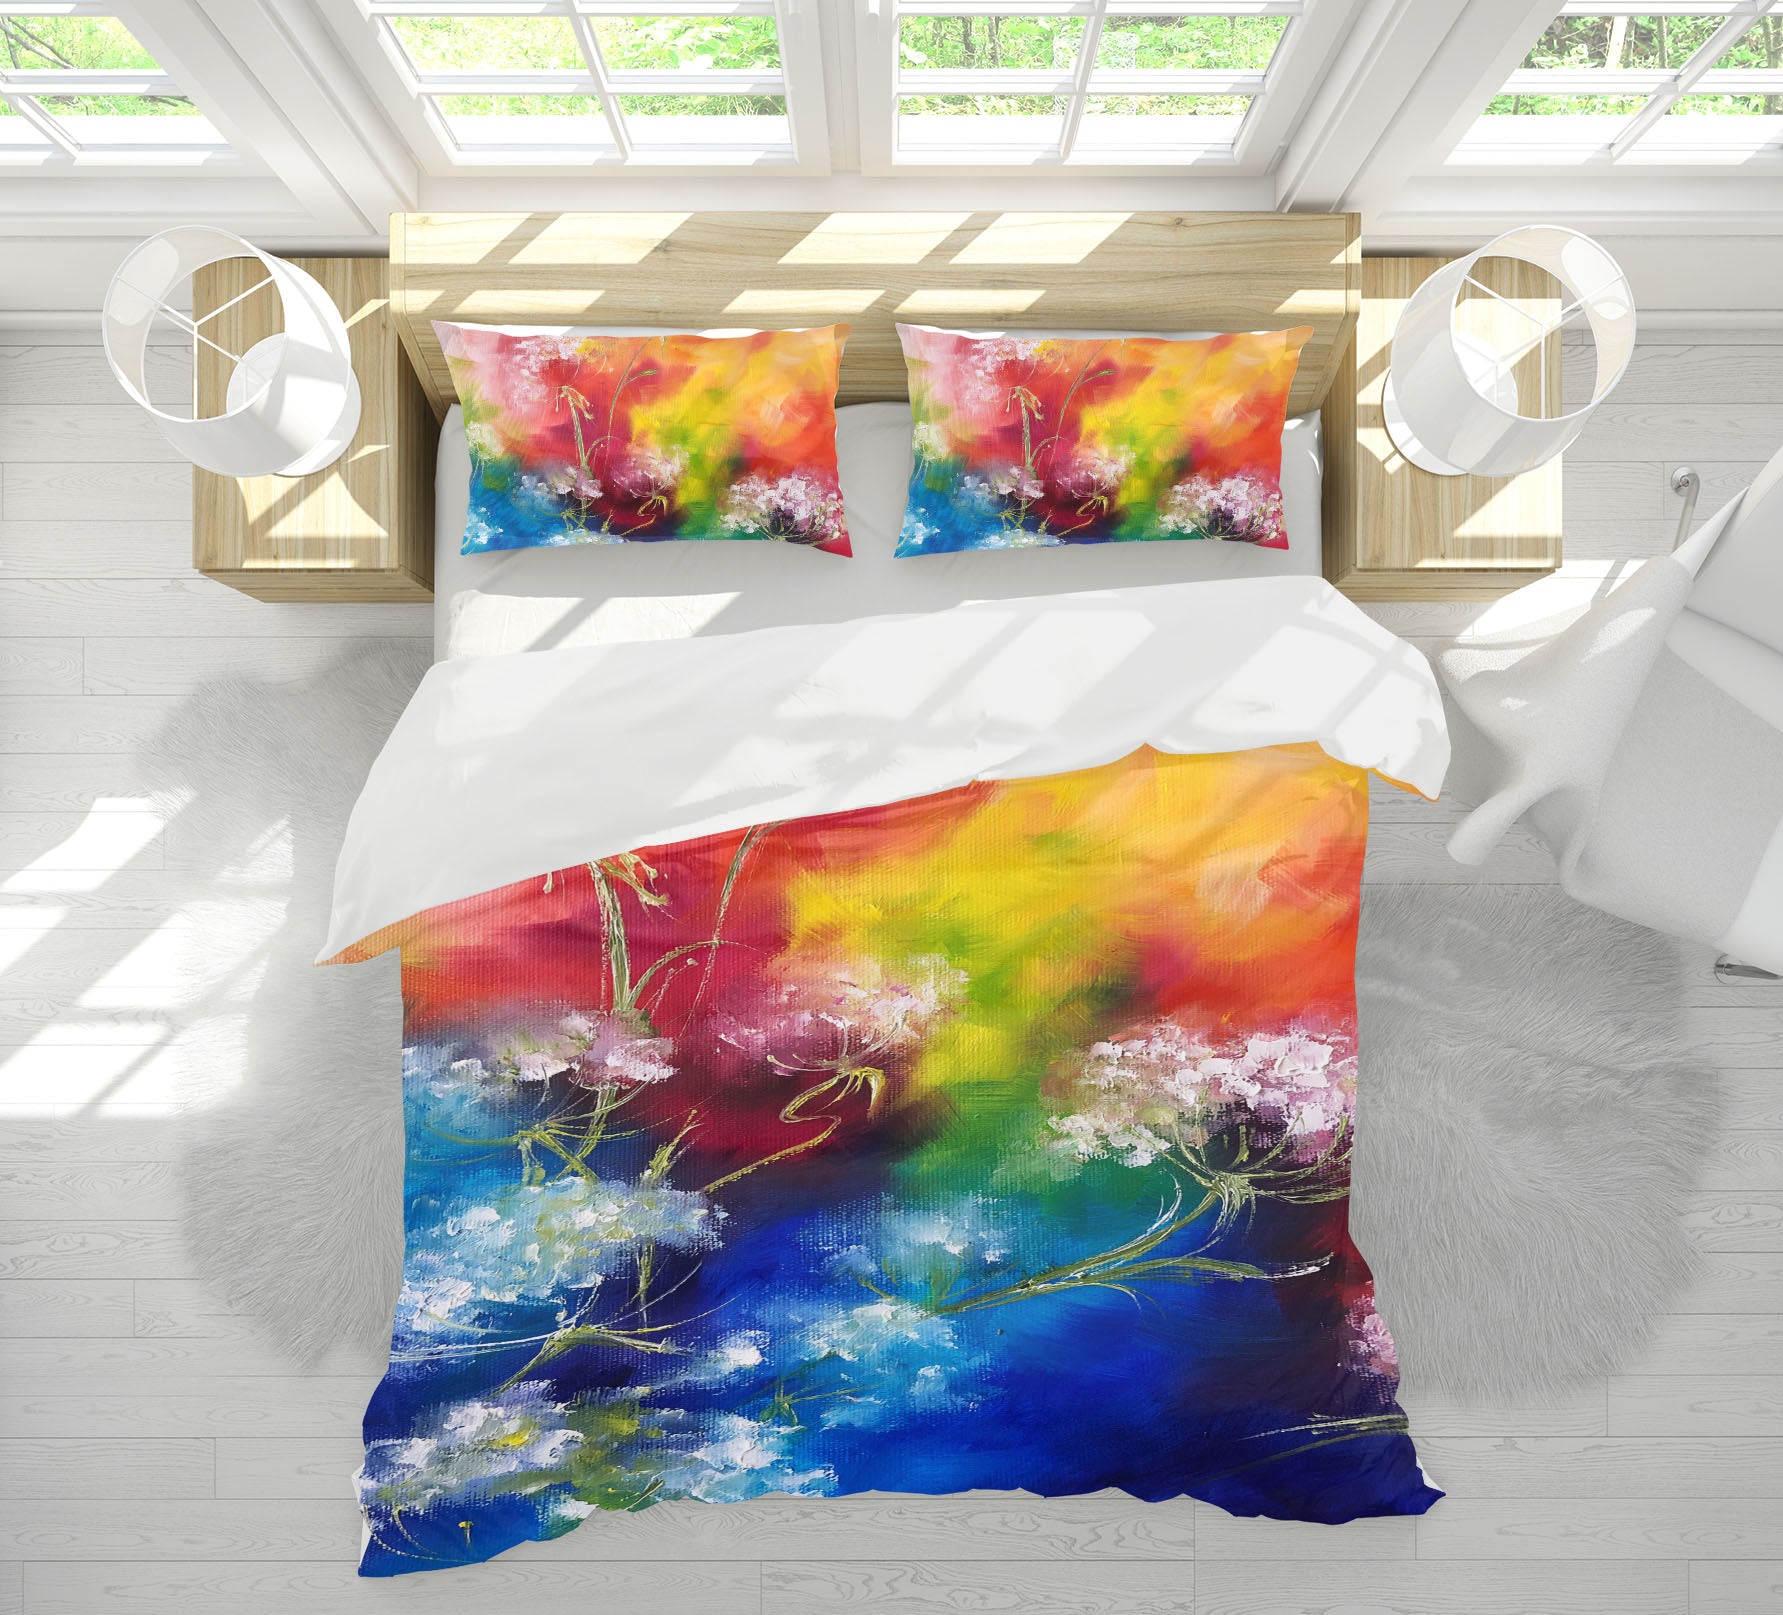 3D Colorful Flower 614 Skromova Marina Bedding Bed Pillowcases Quilt